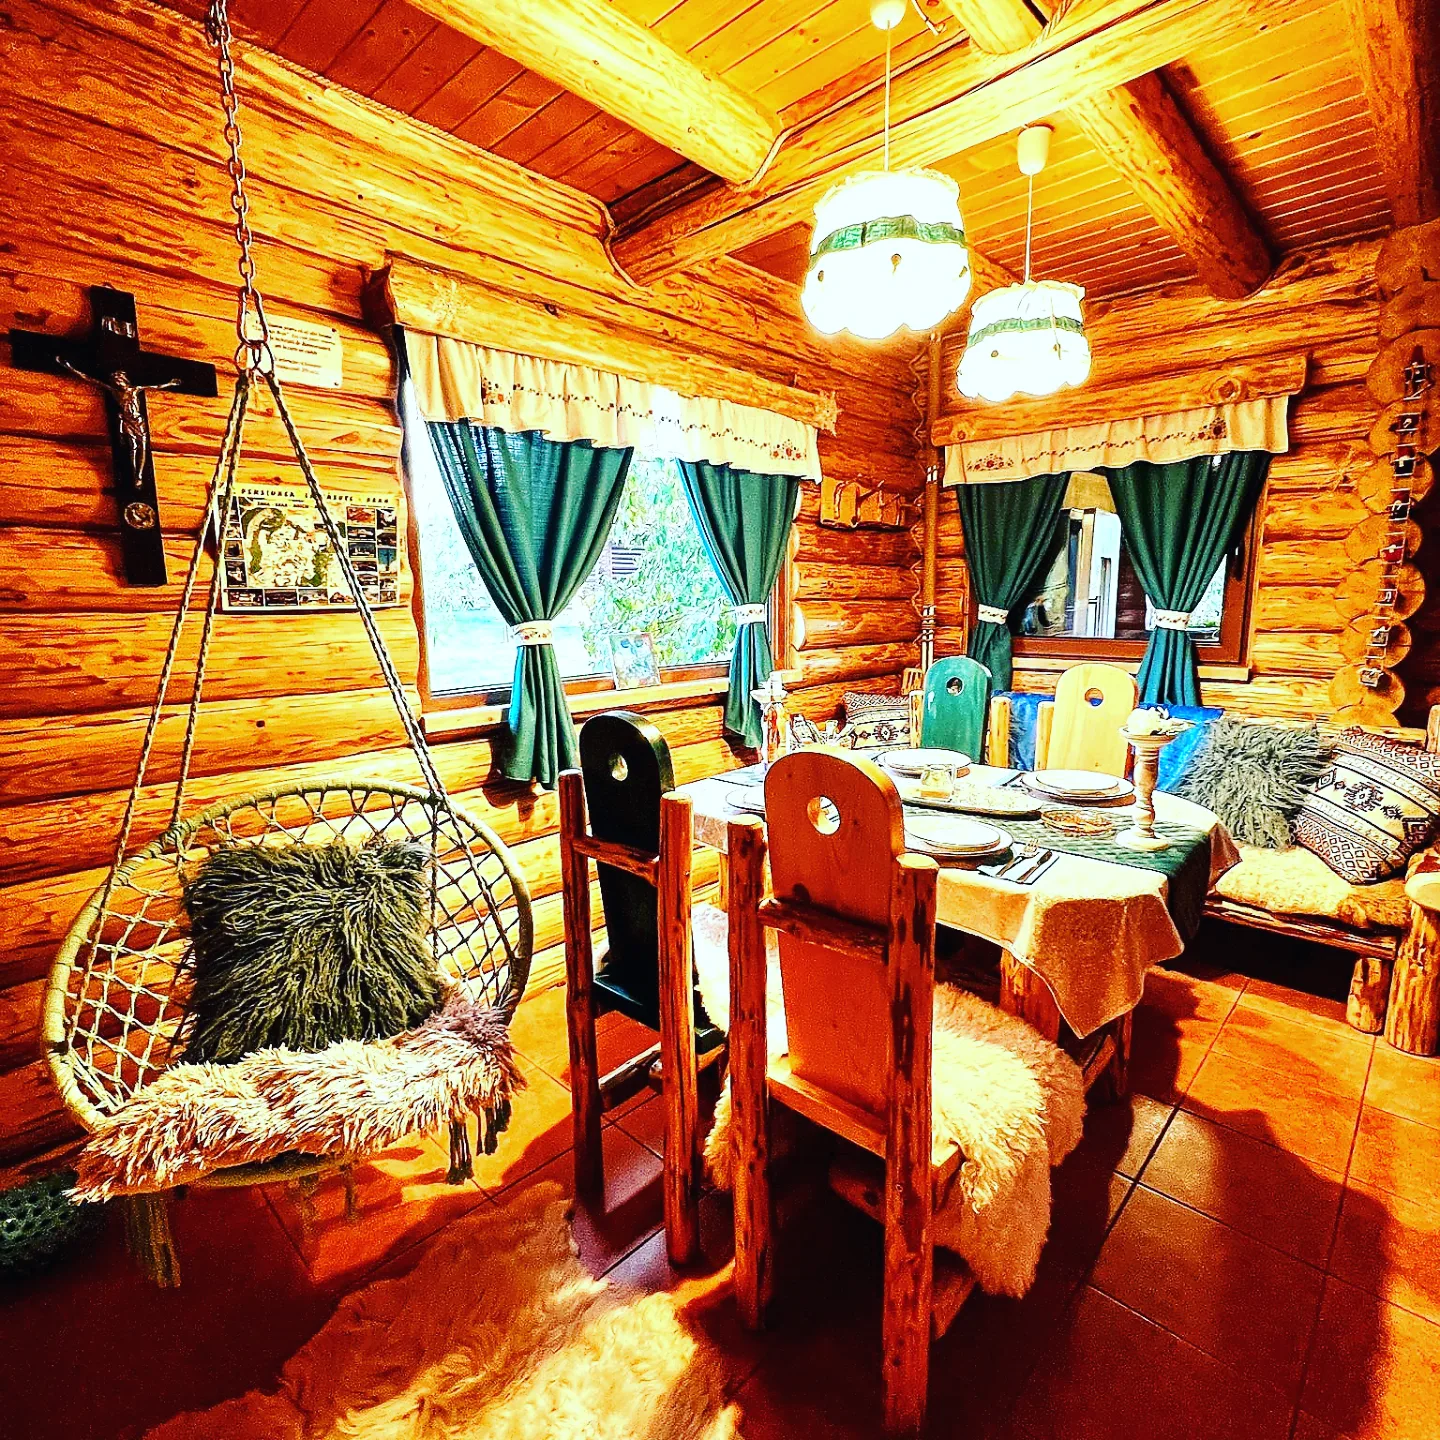 La Casute Bran - accommodation in  Rucar - Bran, Moeciu, Bran (44)